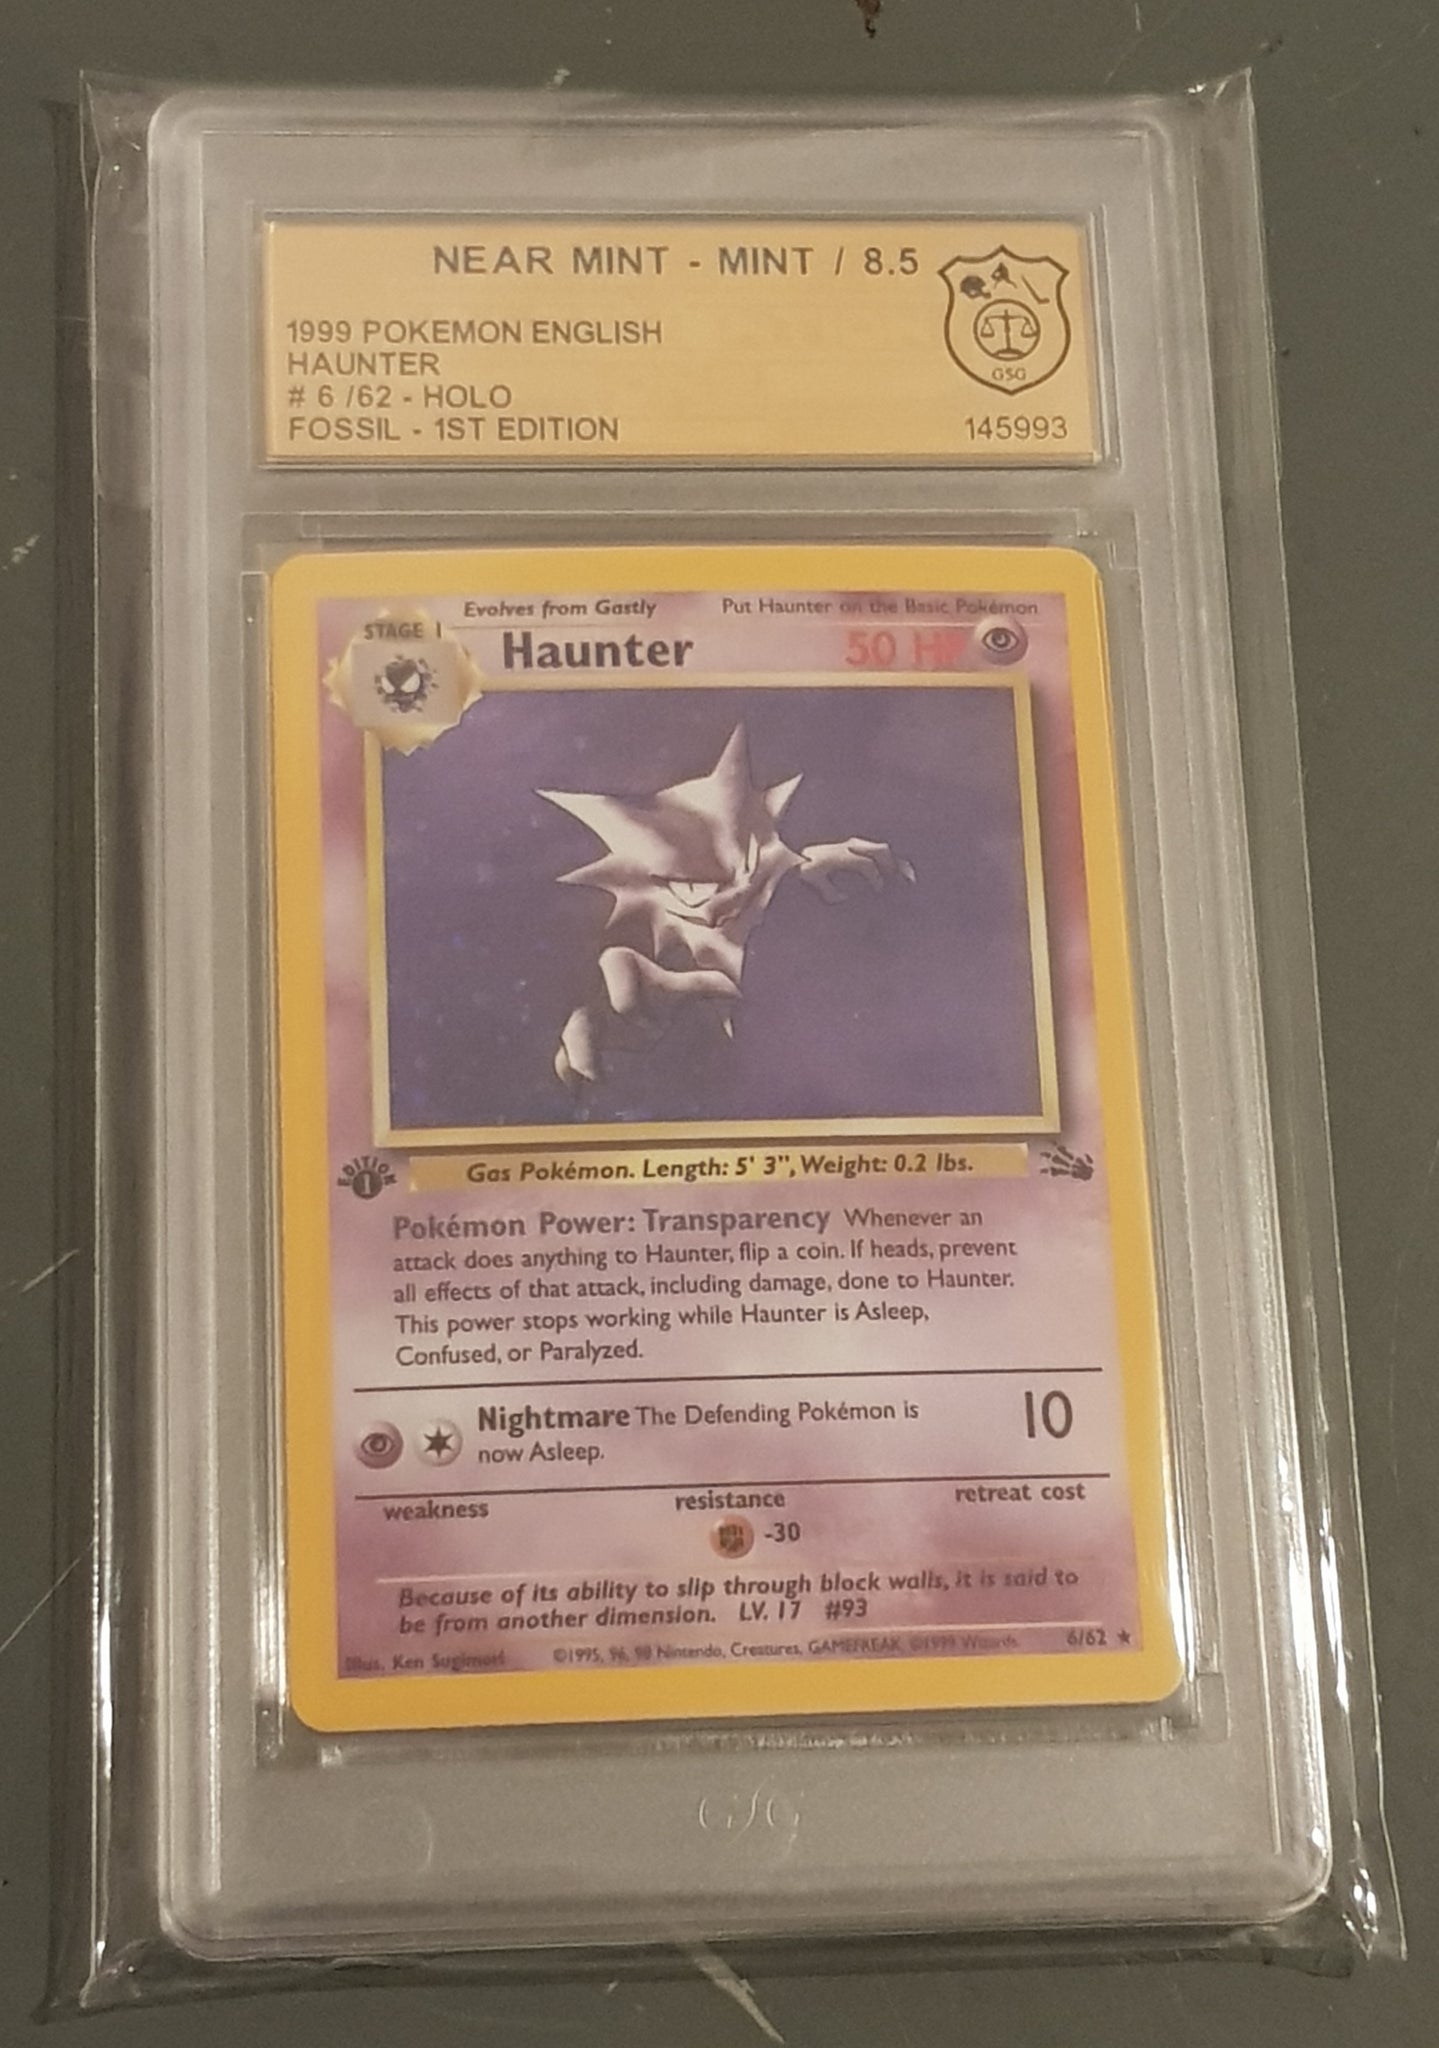 Pokemon Fossil (1st edition) Haunter #6/62 GSG 8.5 Holo Trading Card